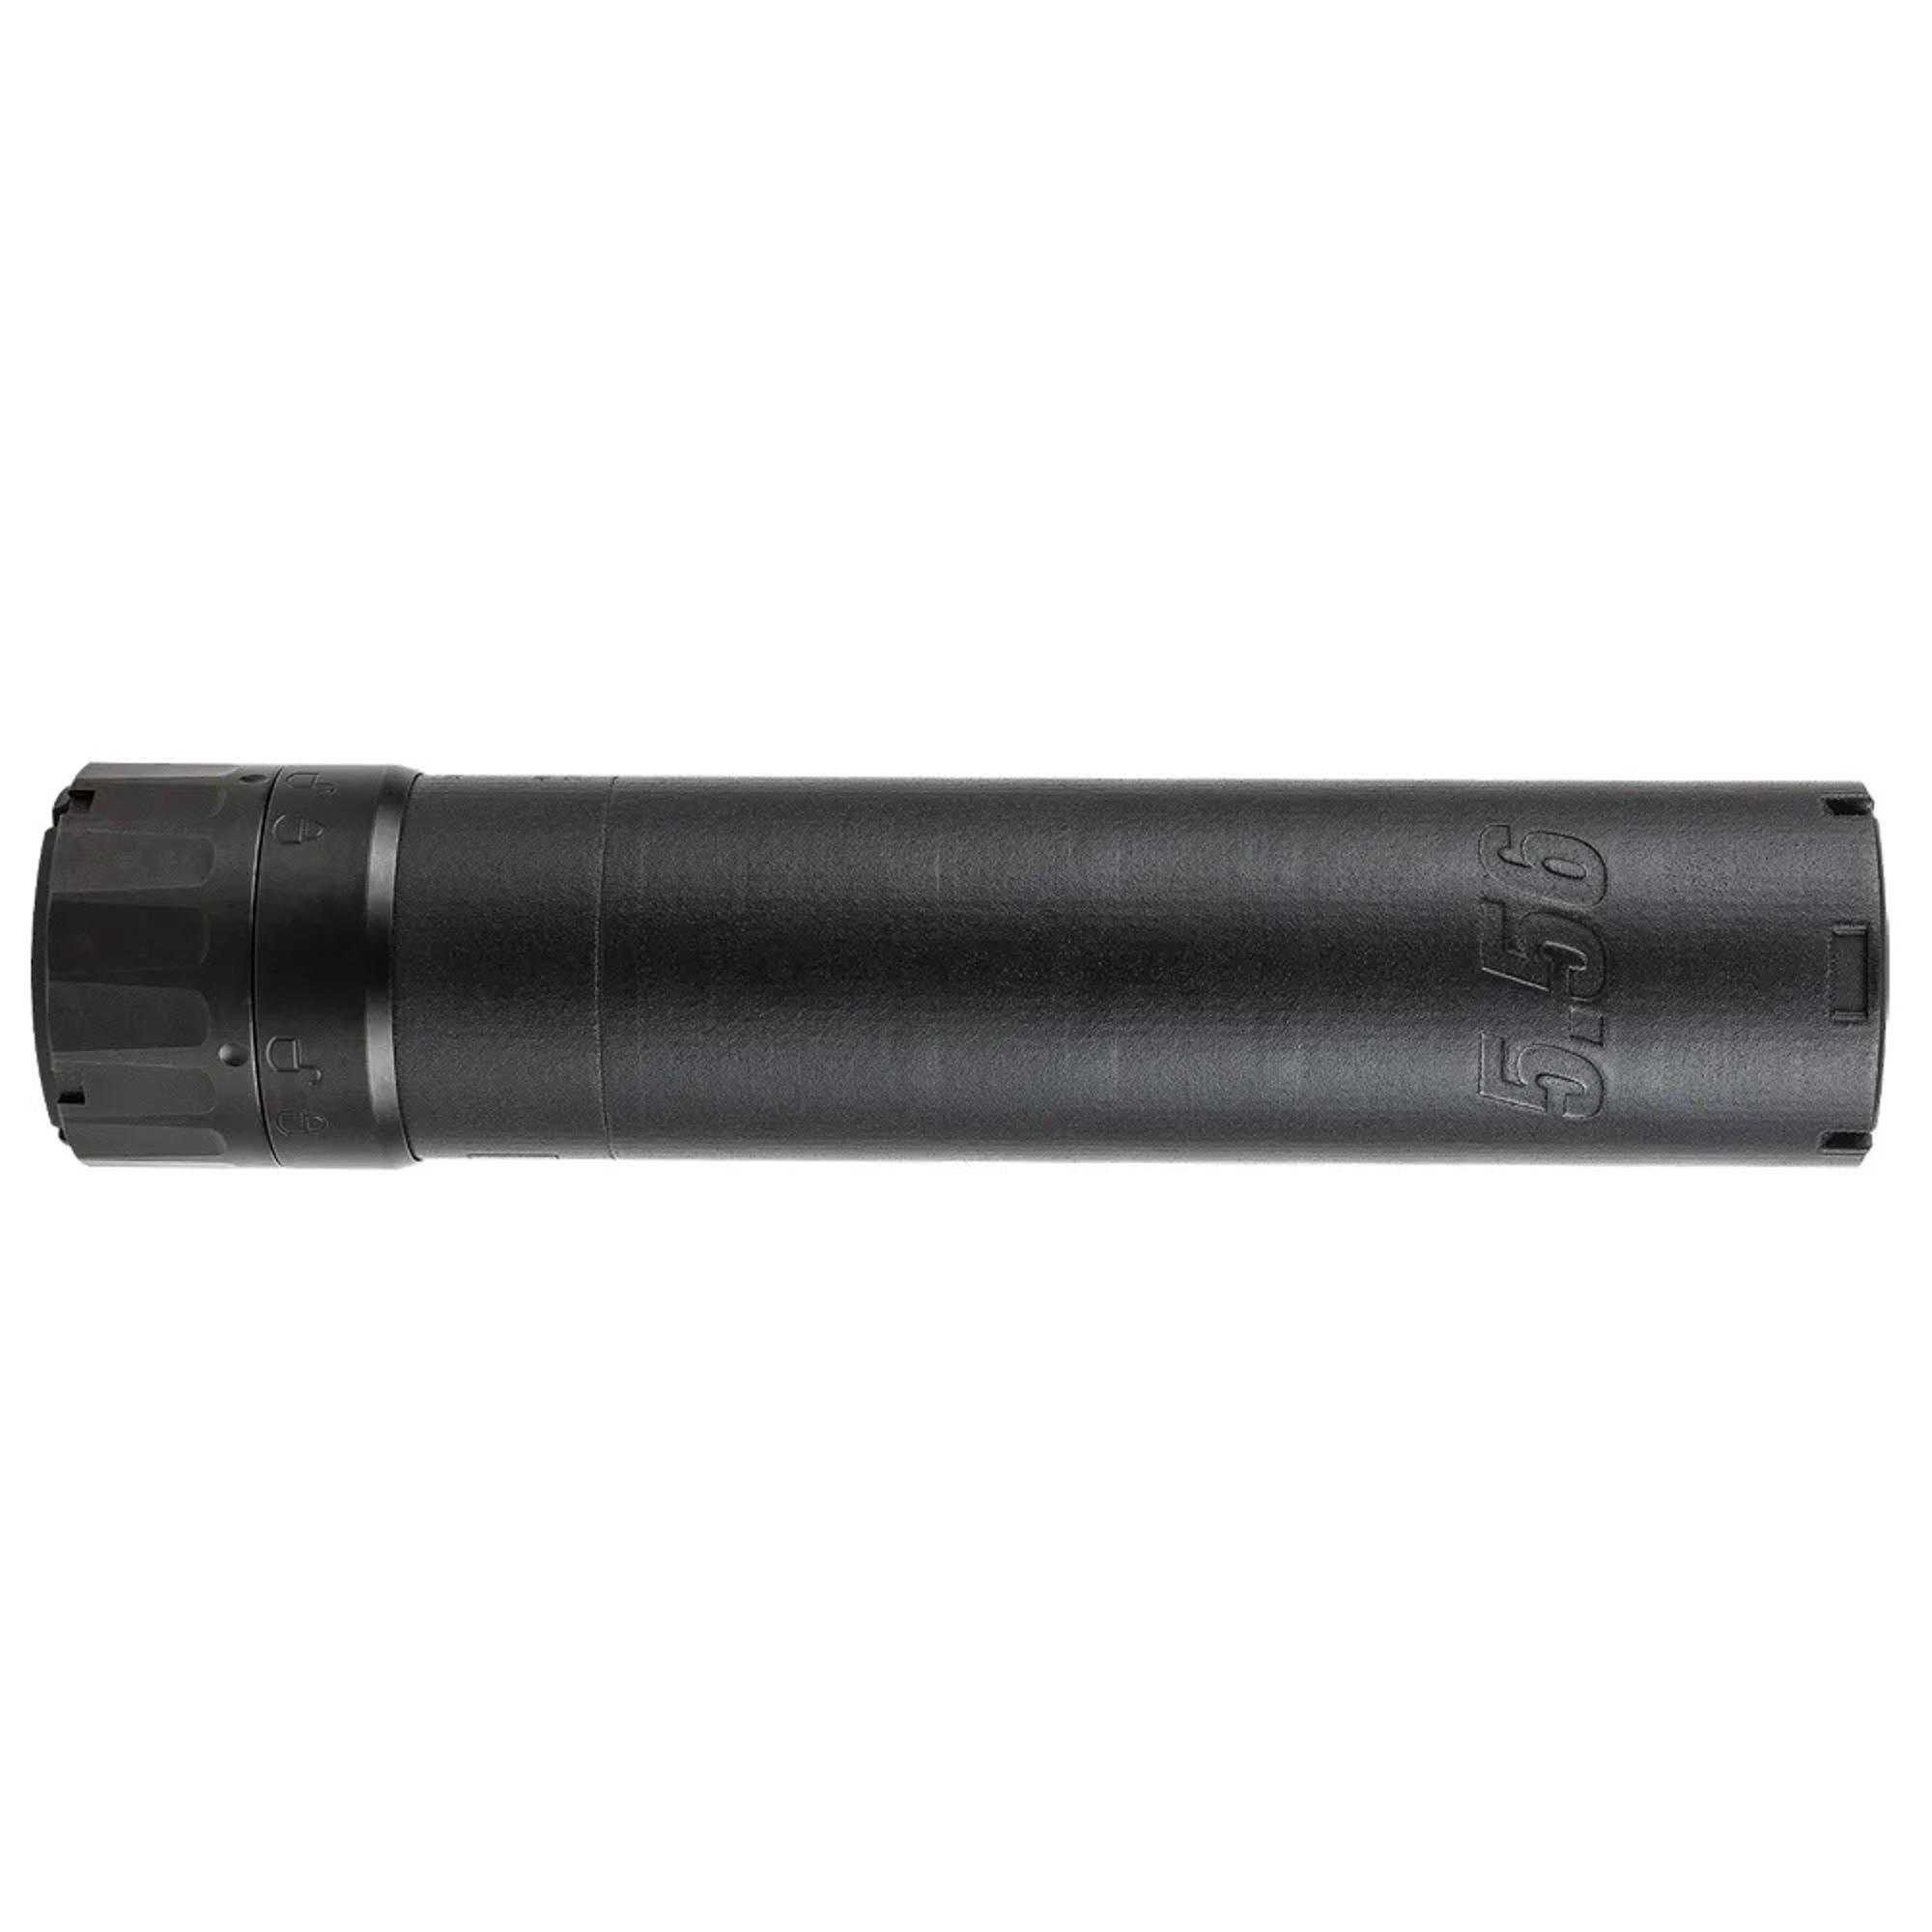 Suppressor, Slxc, 5.56mm, Inc, Qd, Comp